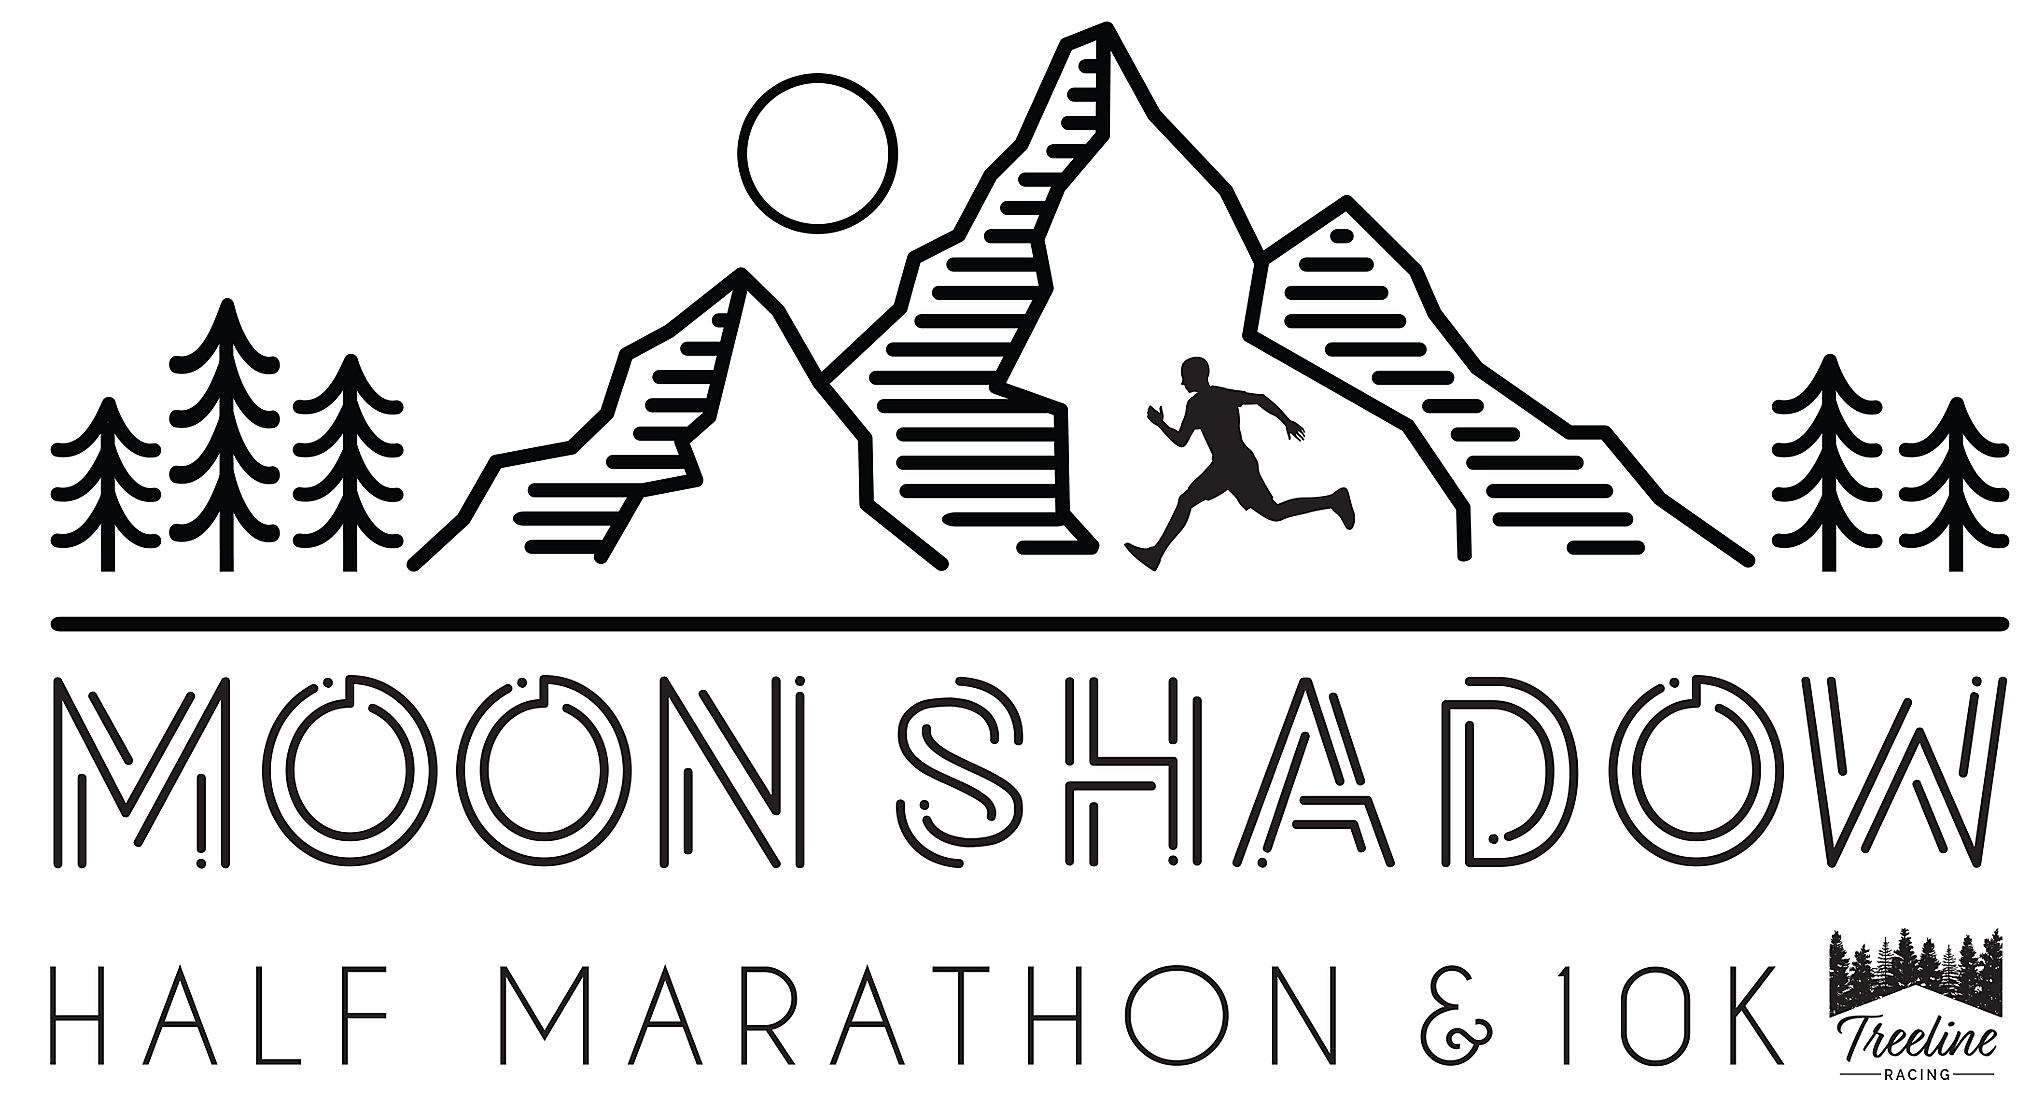 Moonshadow Half Marathon & 10K logo on RaceRaves